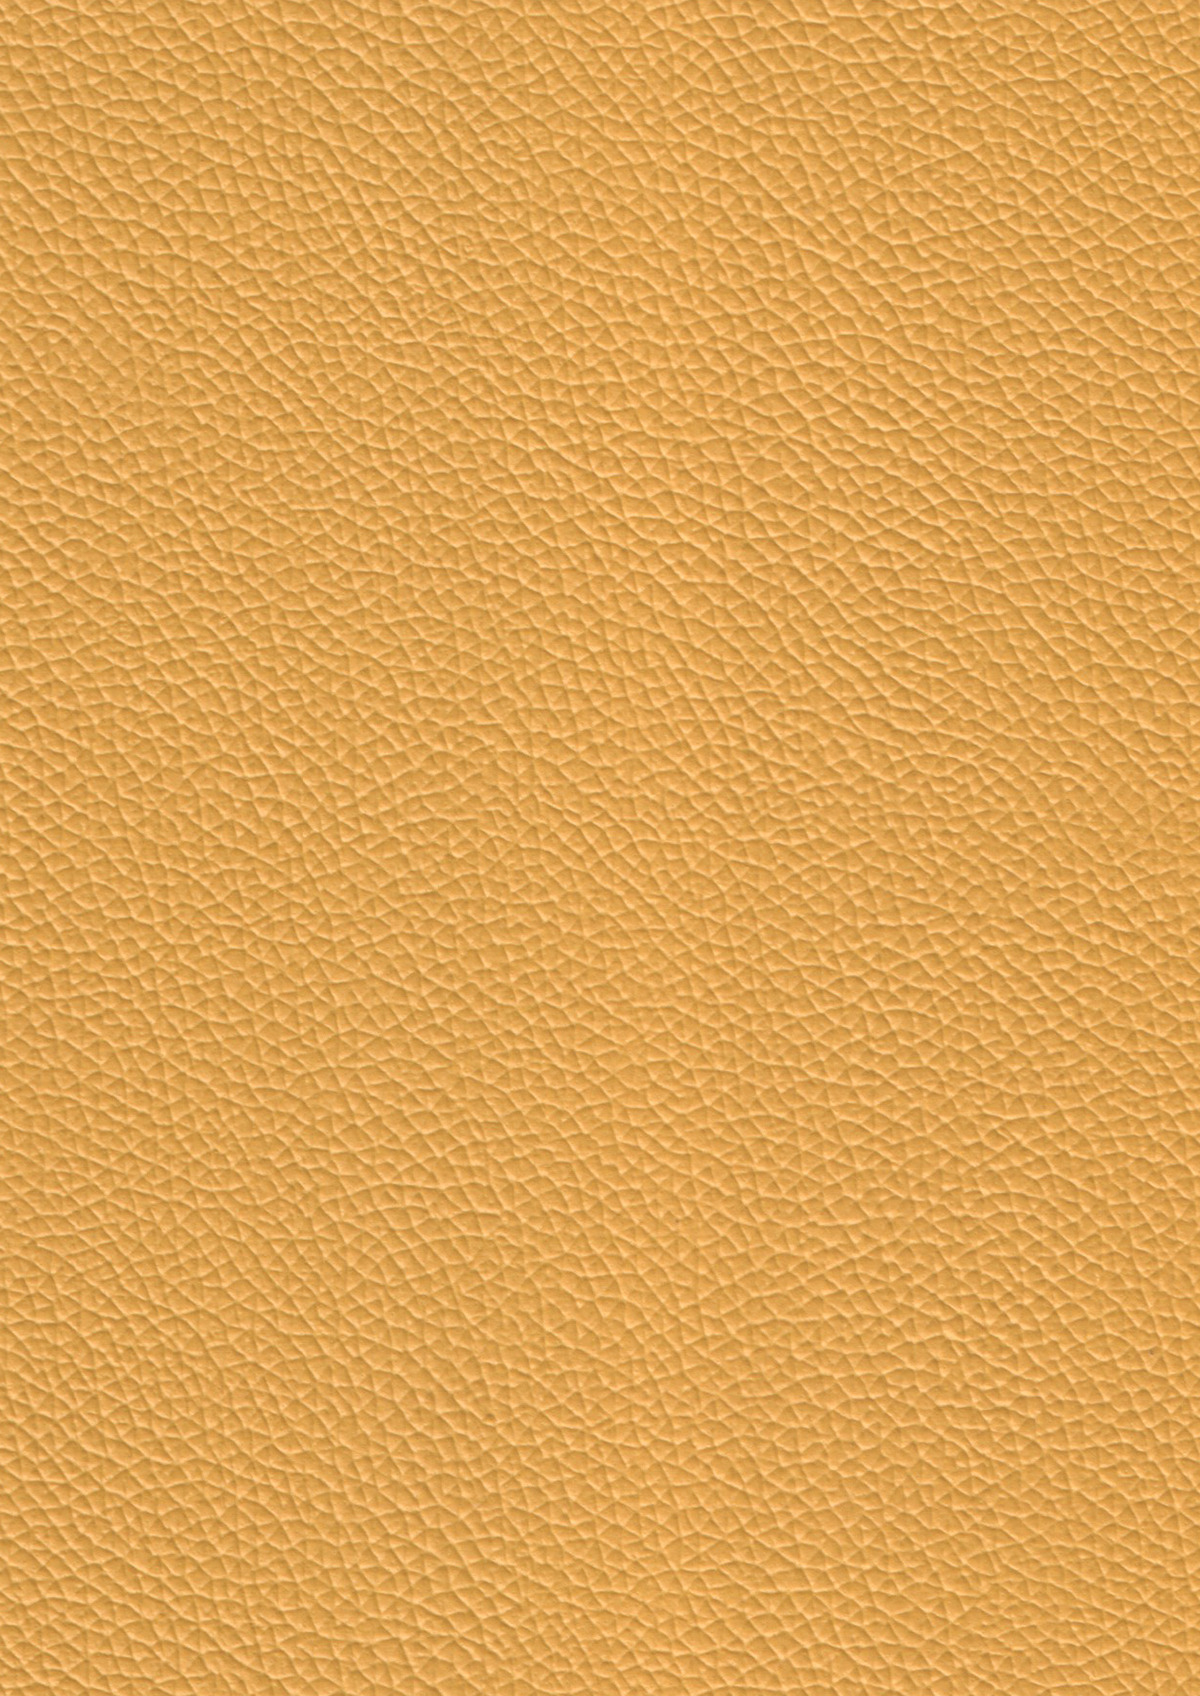 PVC Leather Mustard Yellow